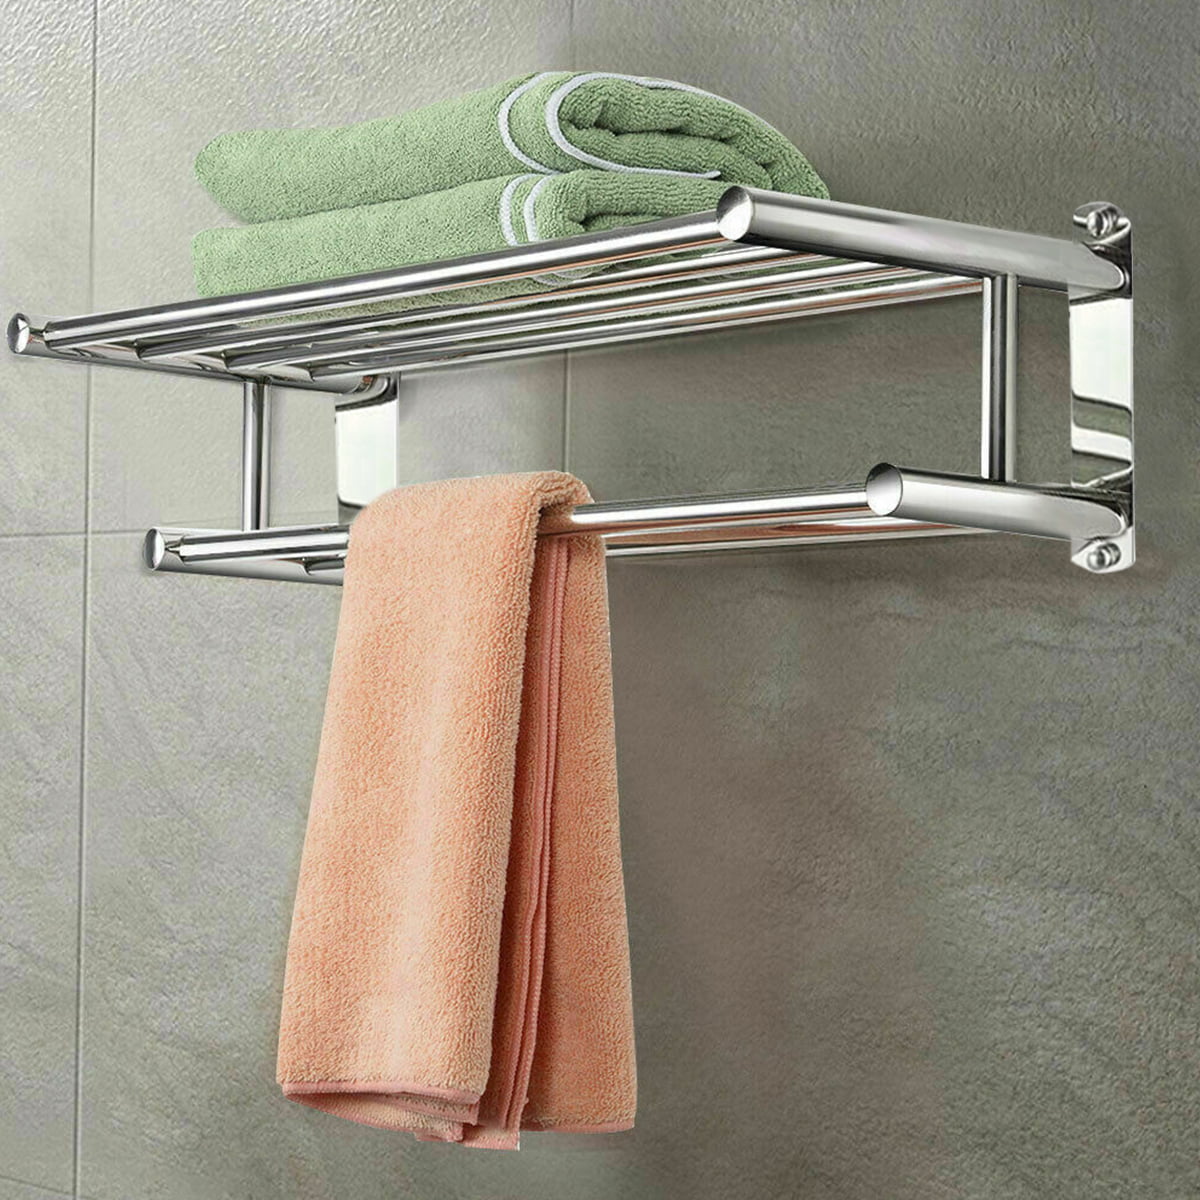 Wall Mounted Towel Rack Bathroom Hotel Rail Holder Storage Shelf Stainless 2Tier 